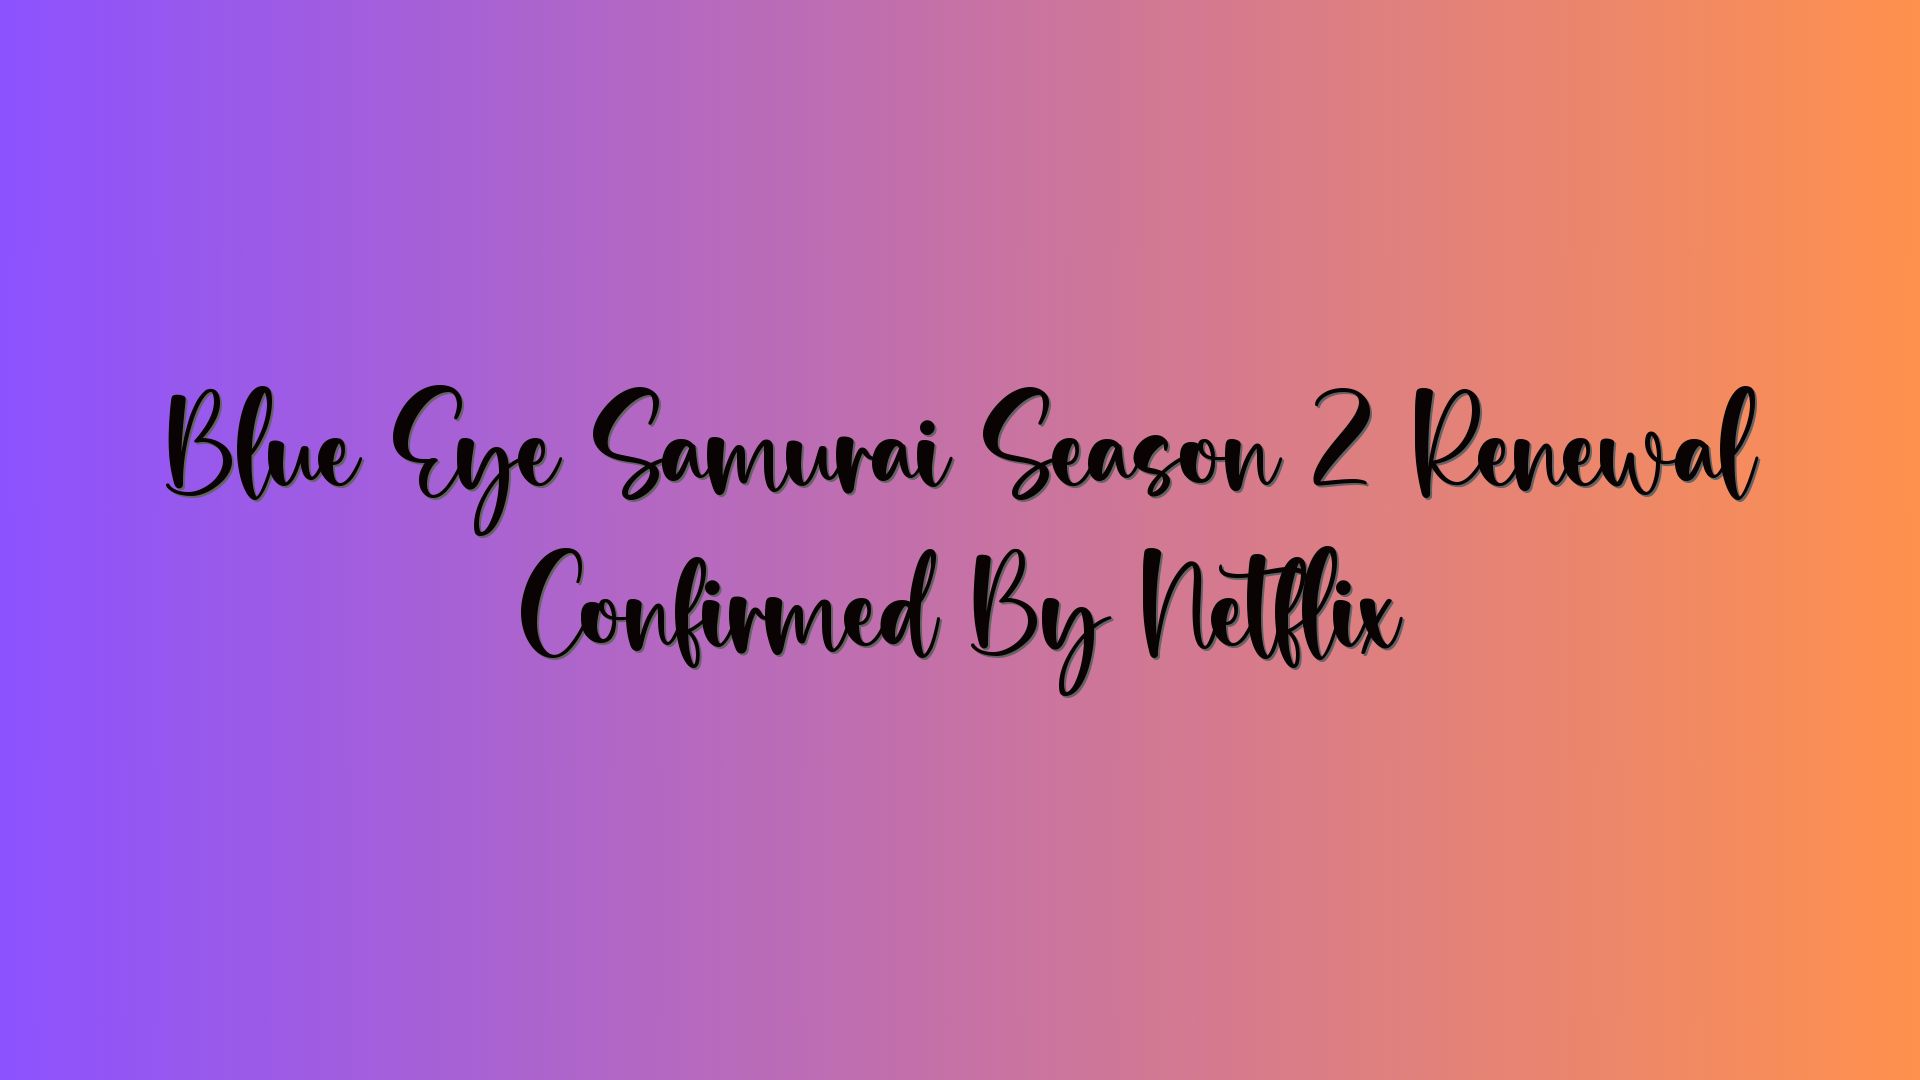 Blue Eye Samurai Season 2 Renewal Confirmed By Netflix